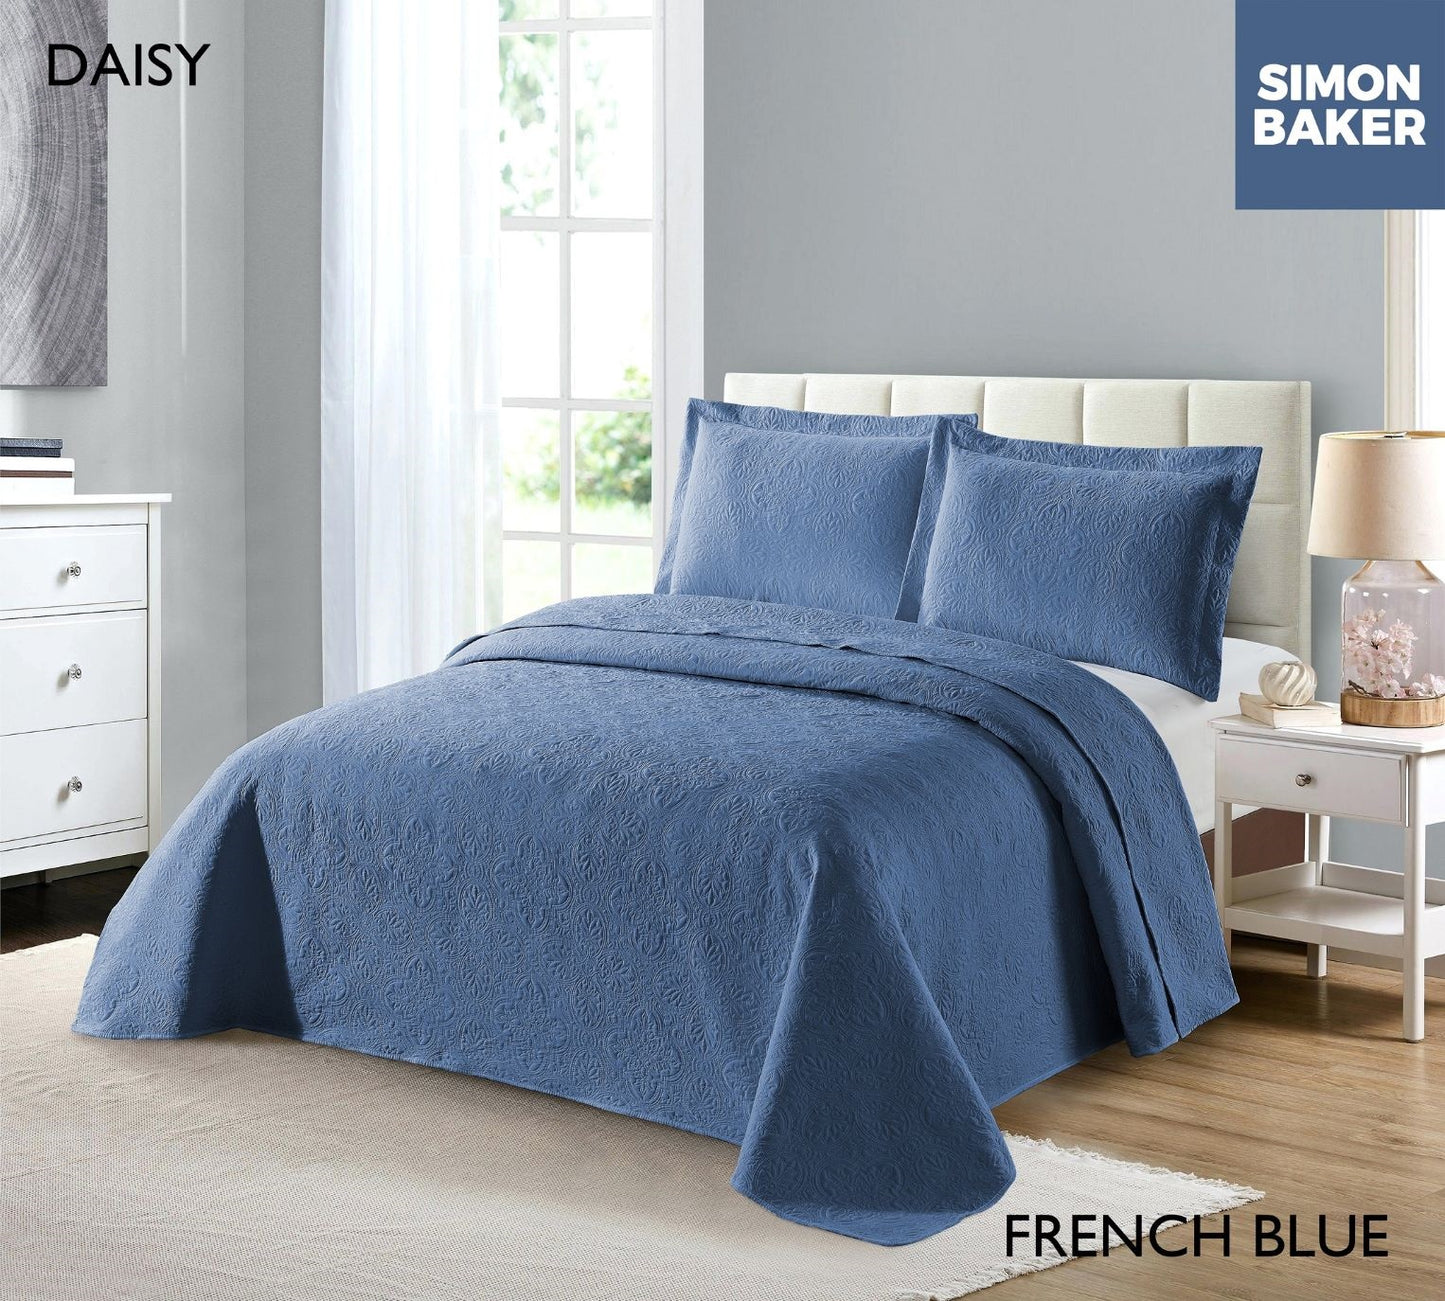 Simon Baker | Daisy Bedspread French Blue (Various Sizes)